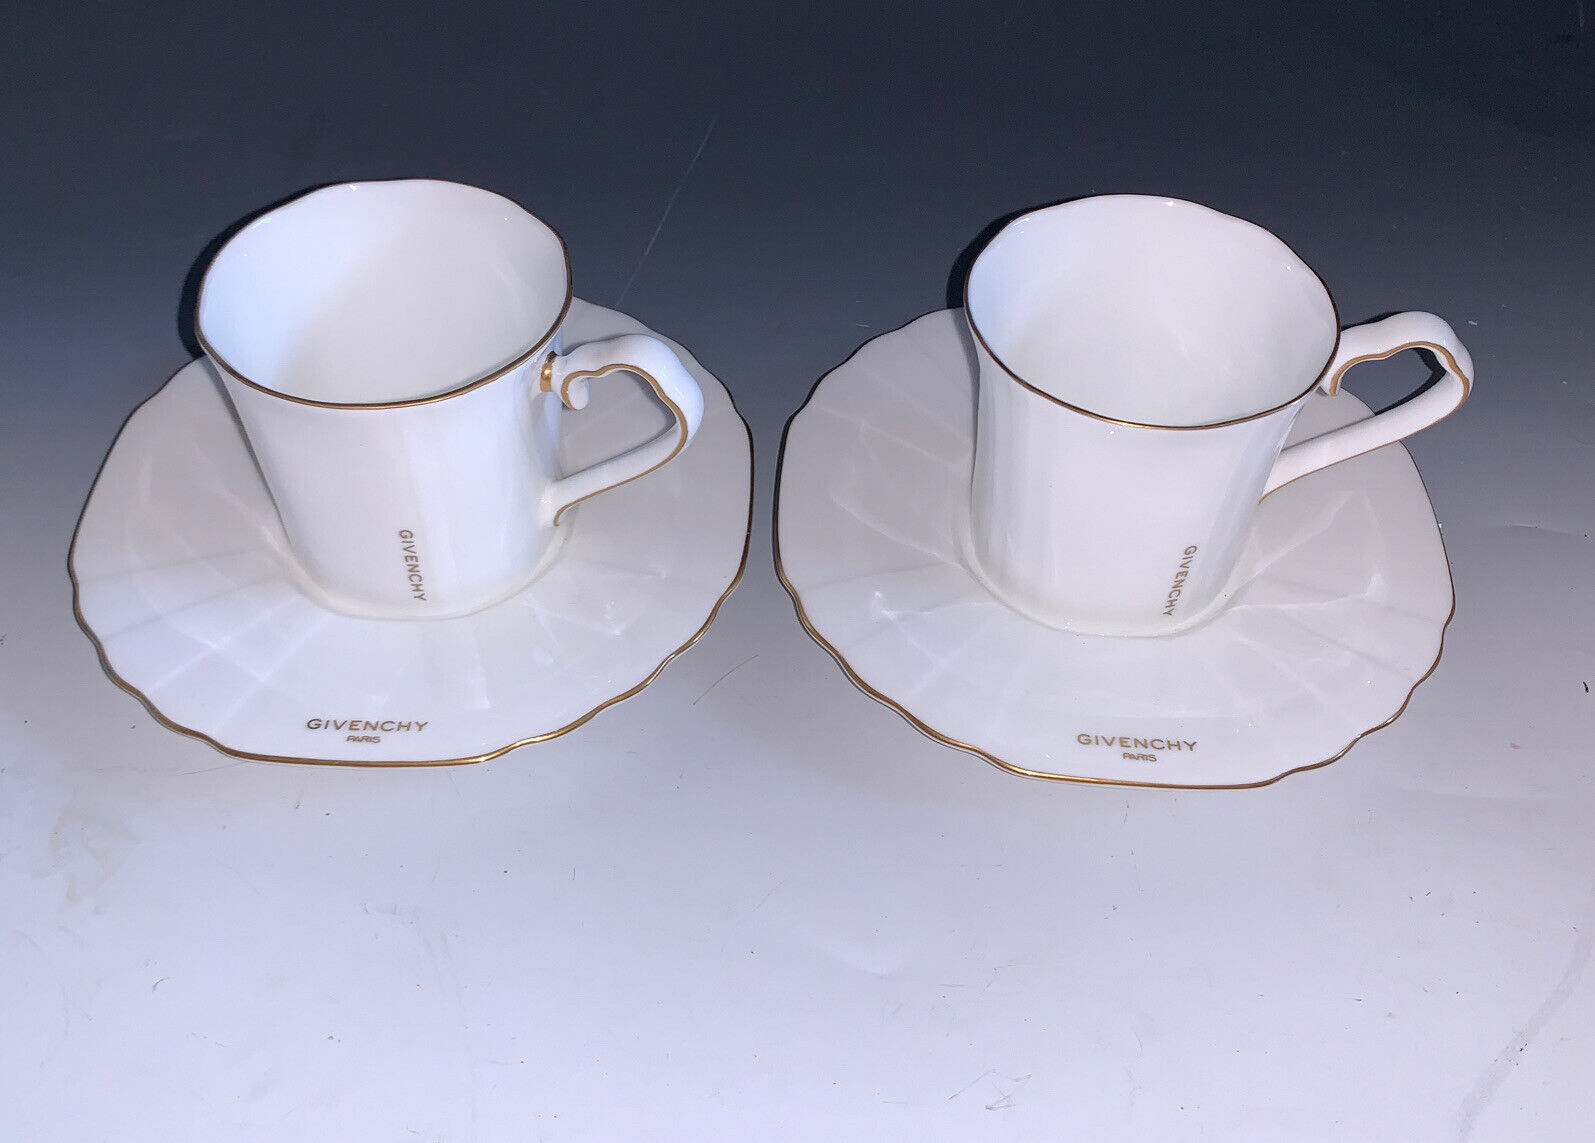 Givenchy Paris Yamaka Tea Cups & Saucers Set of 2 From Japan Bone China